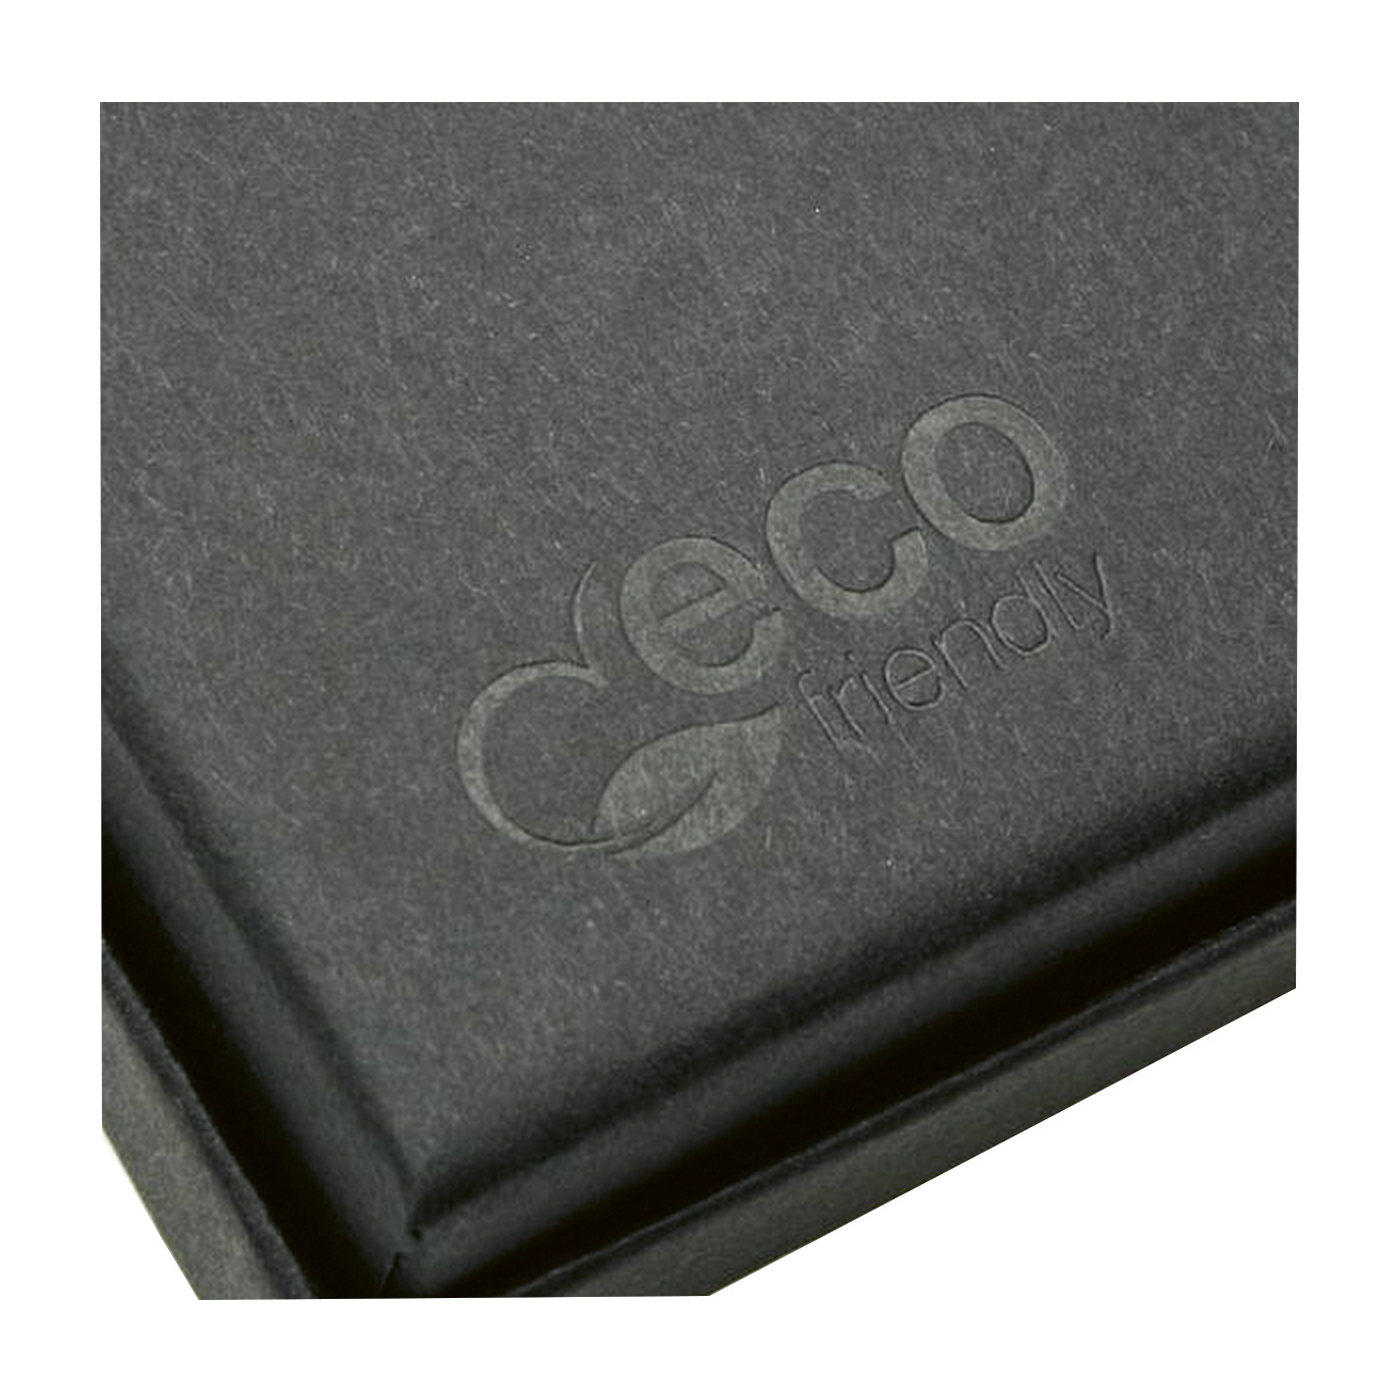 Jewellery Packaging "Eco", Black, 167 x 167 x 32 mm - 1 piece